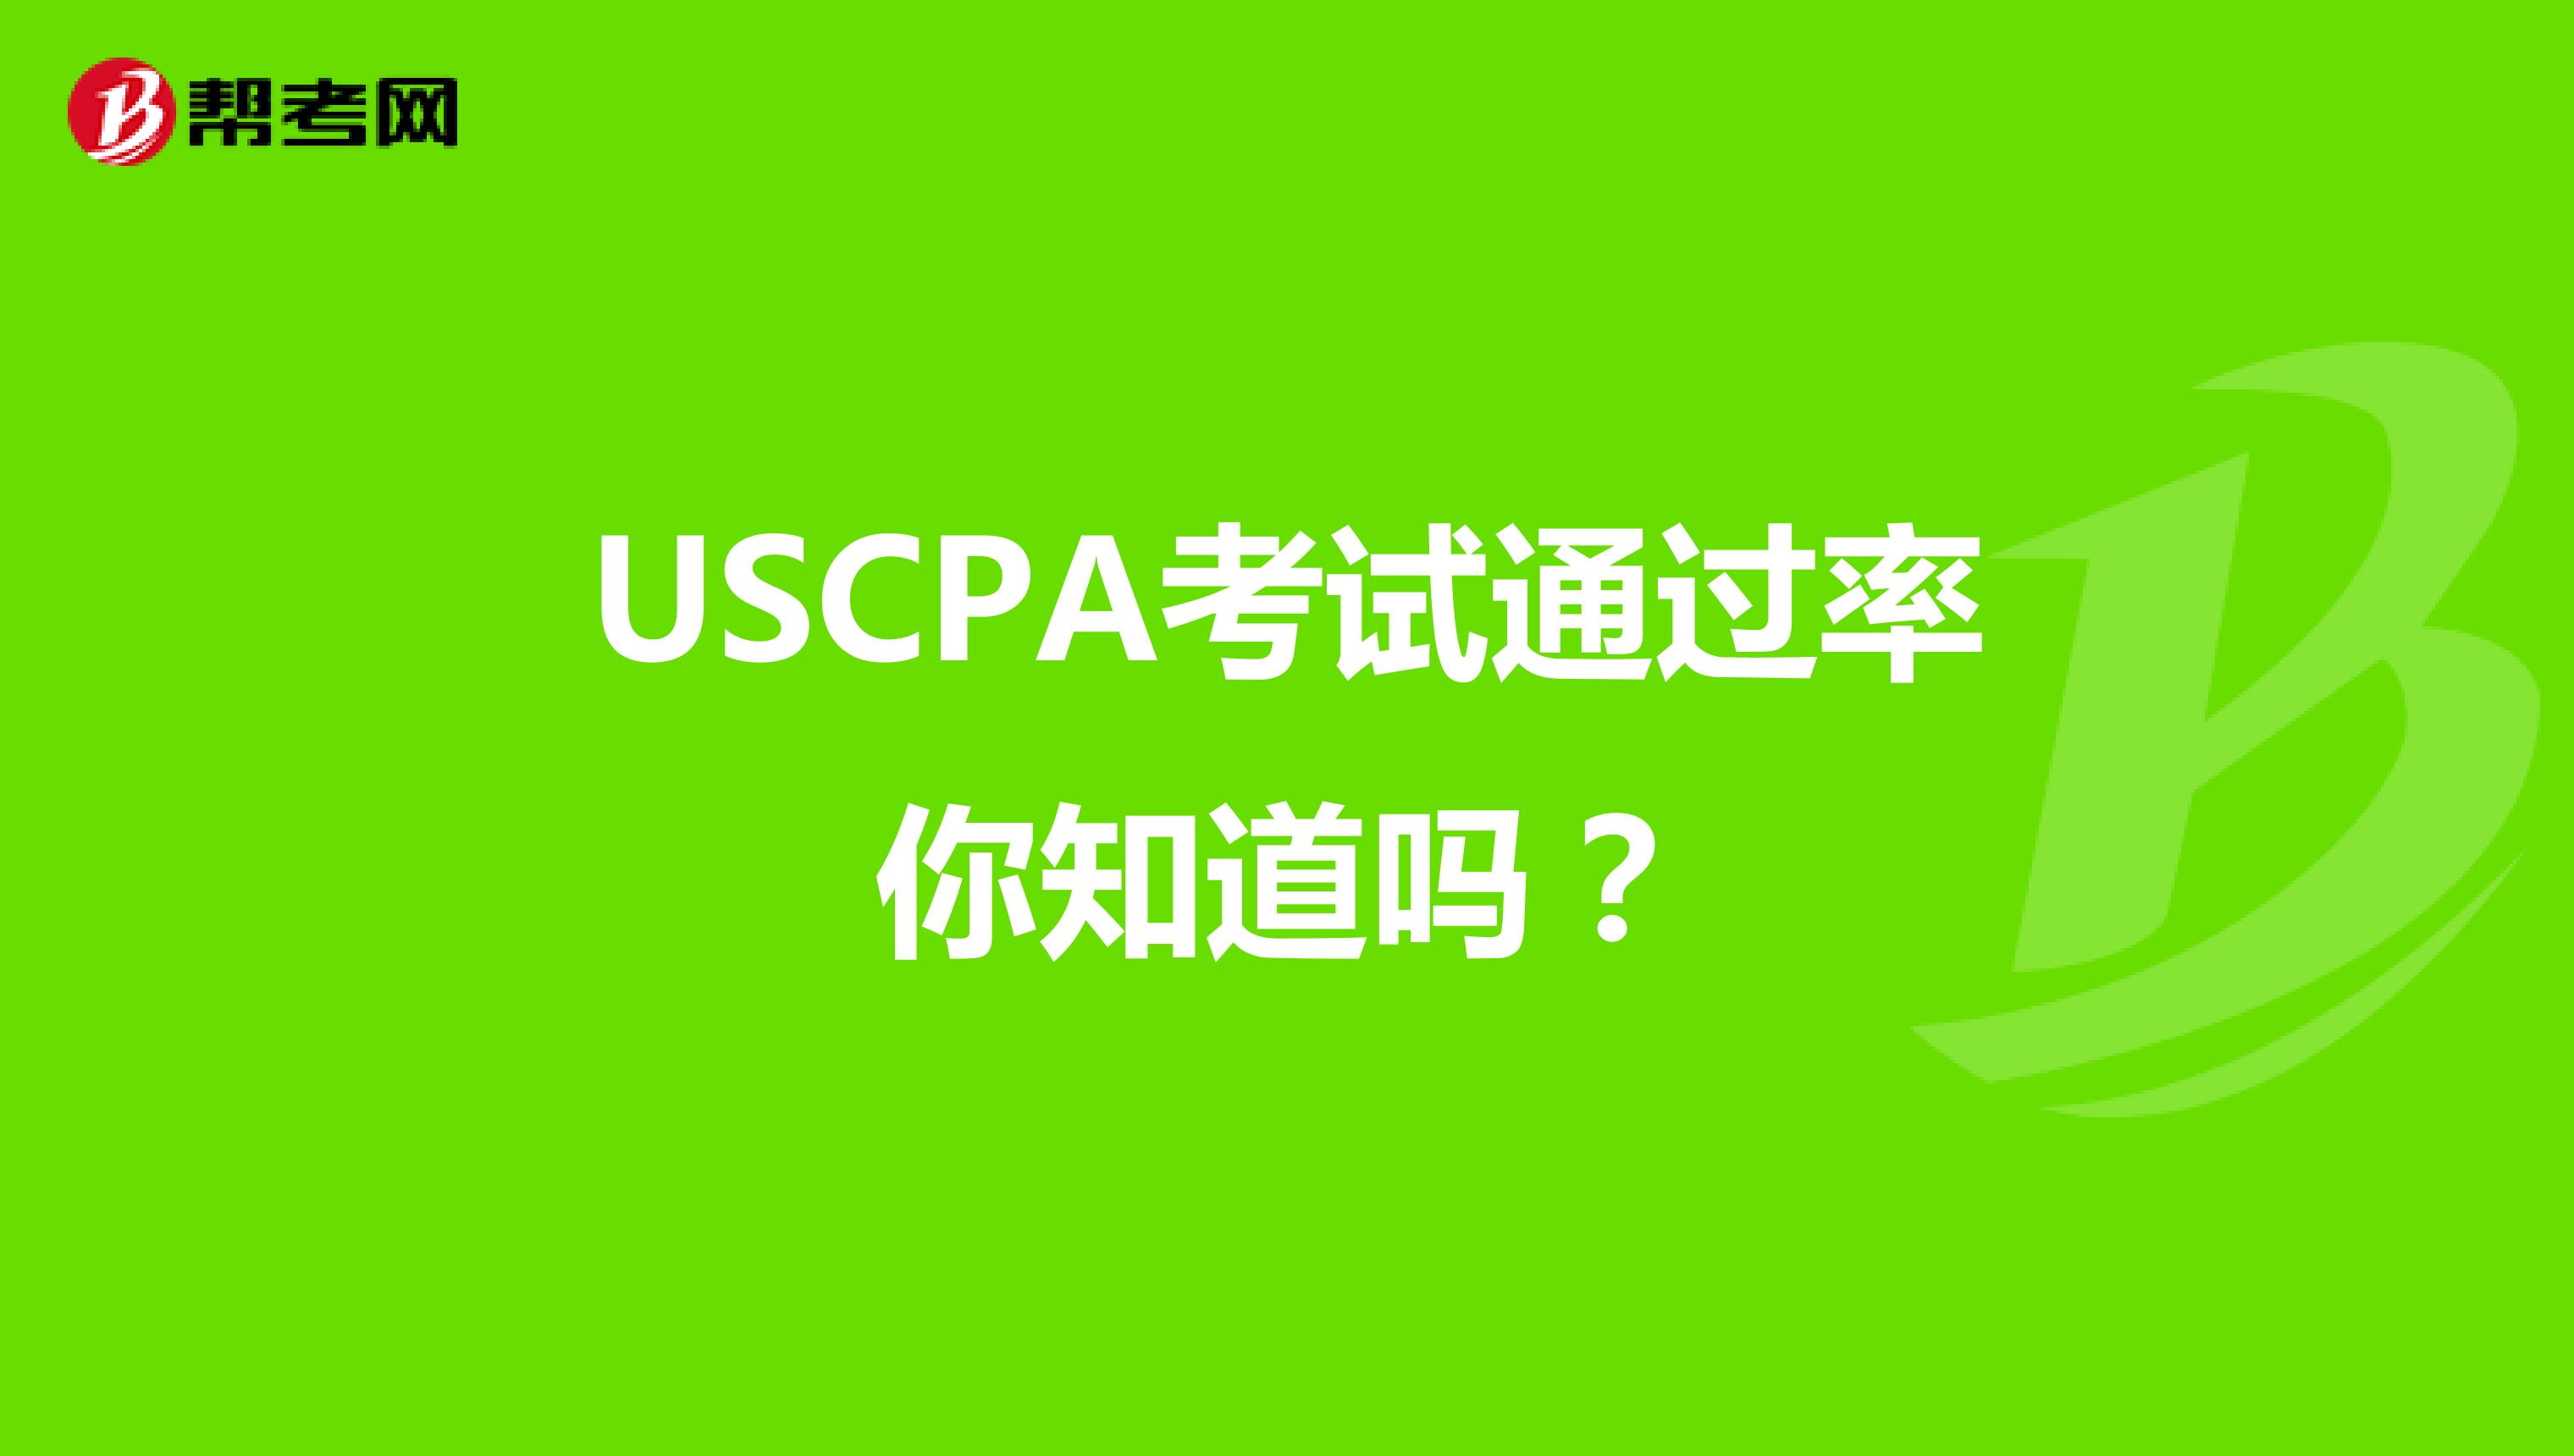 USCPA考试通过率你知道吗？